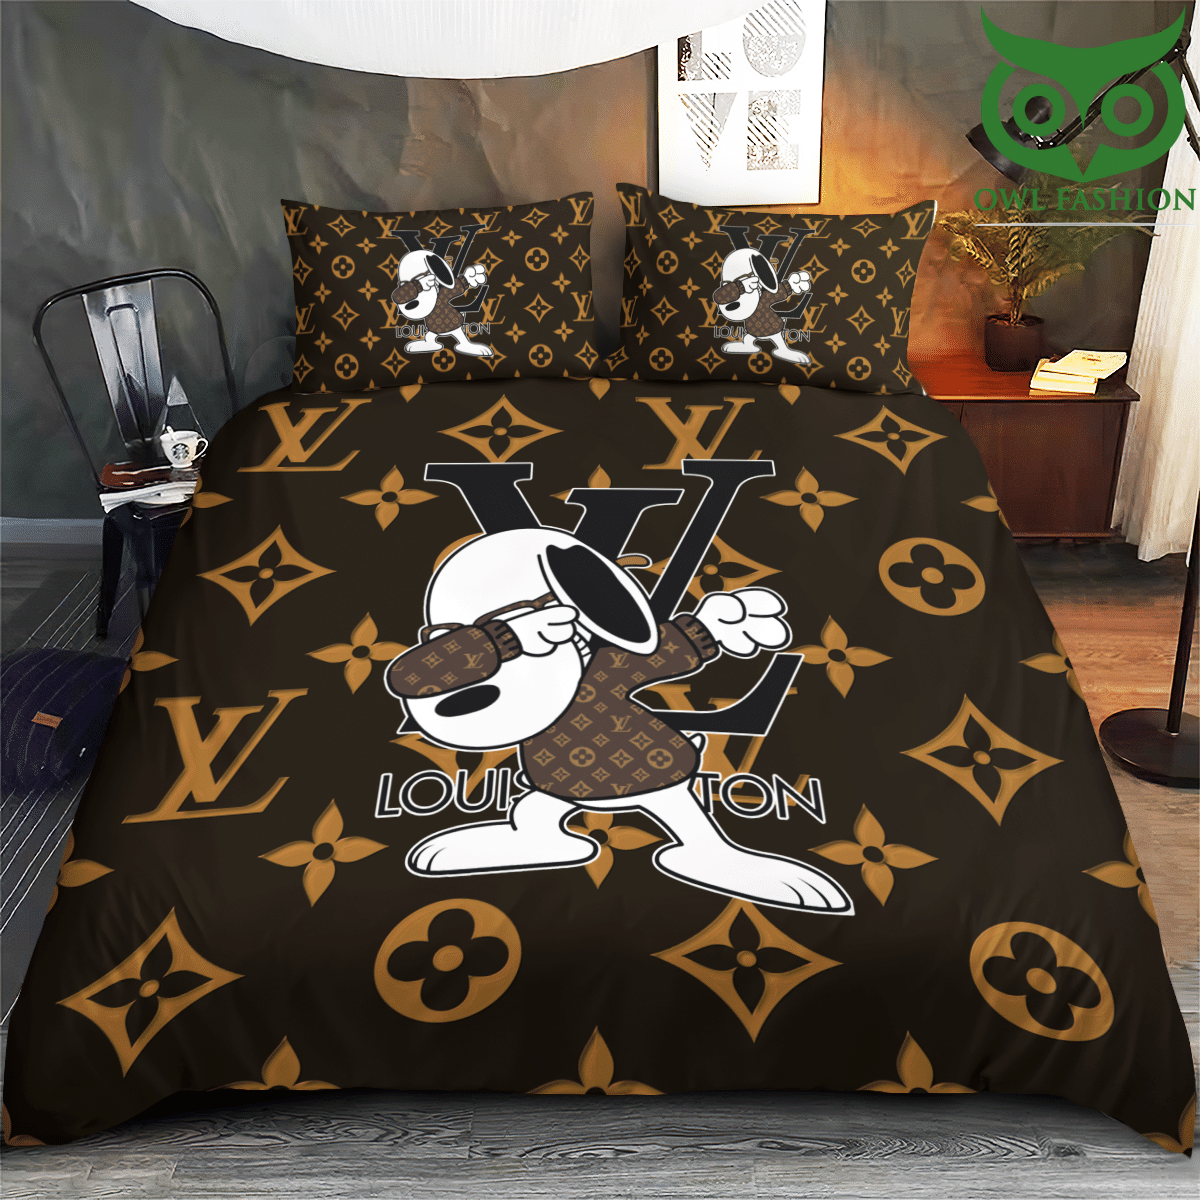 Louis Vuitton Snoopy dog Dabbing bedding set